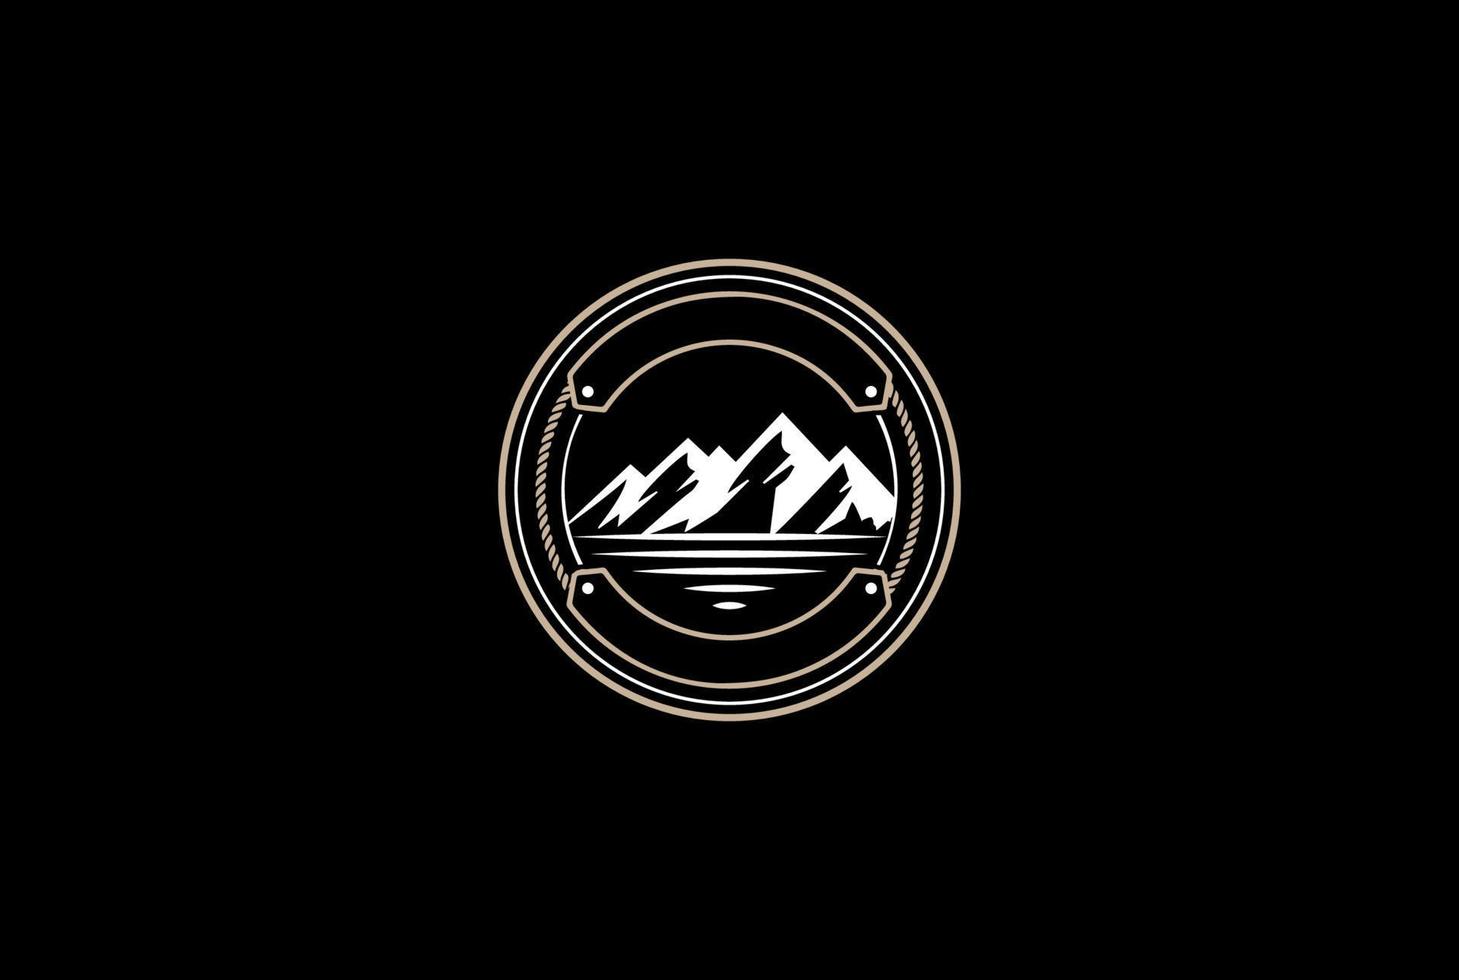 Ice Snow Mountain for Adventure Badge Label Seal Sticker Logo Design Vector